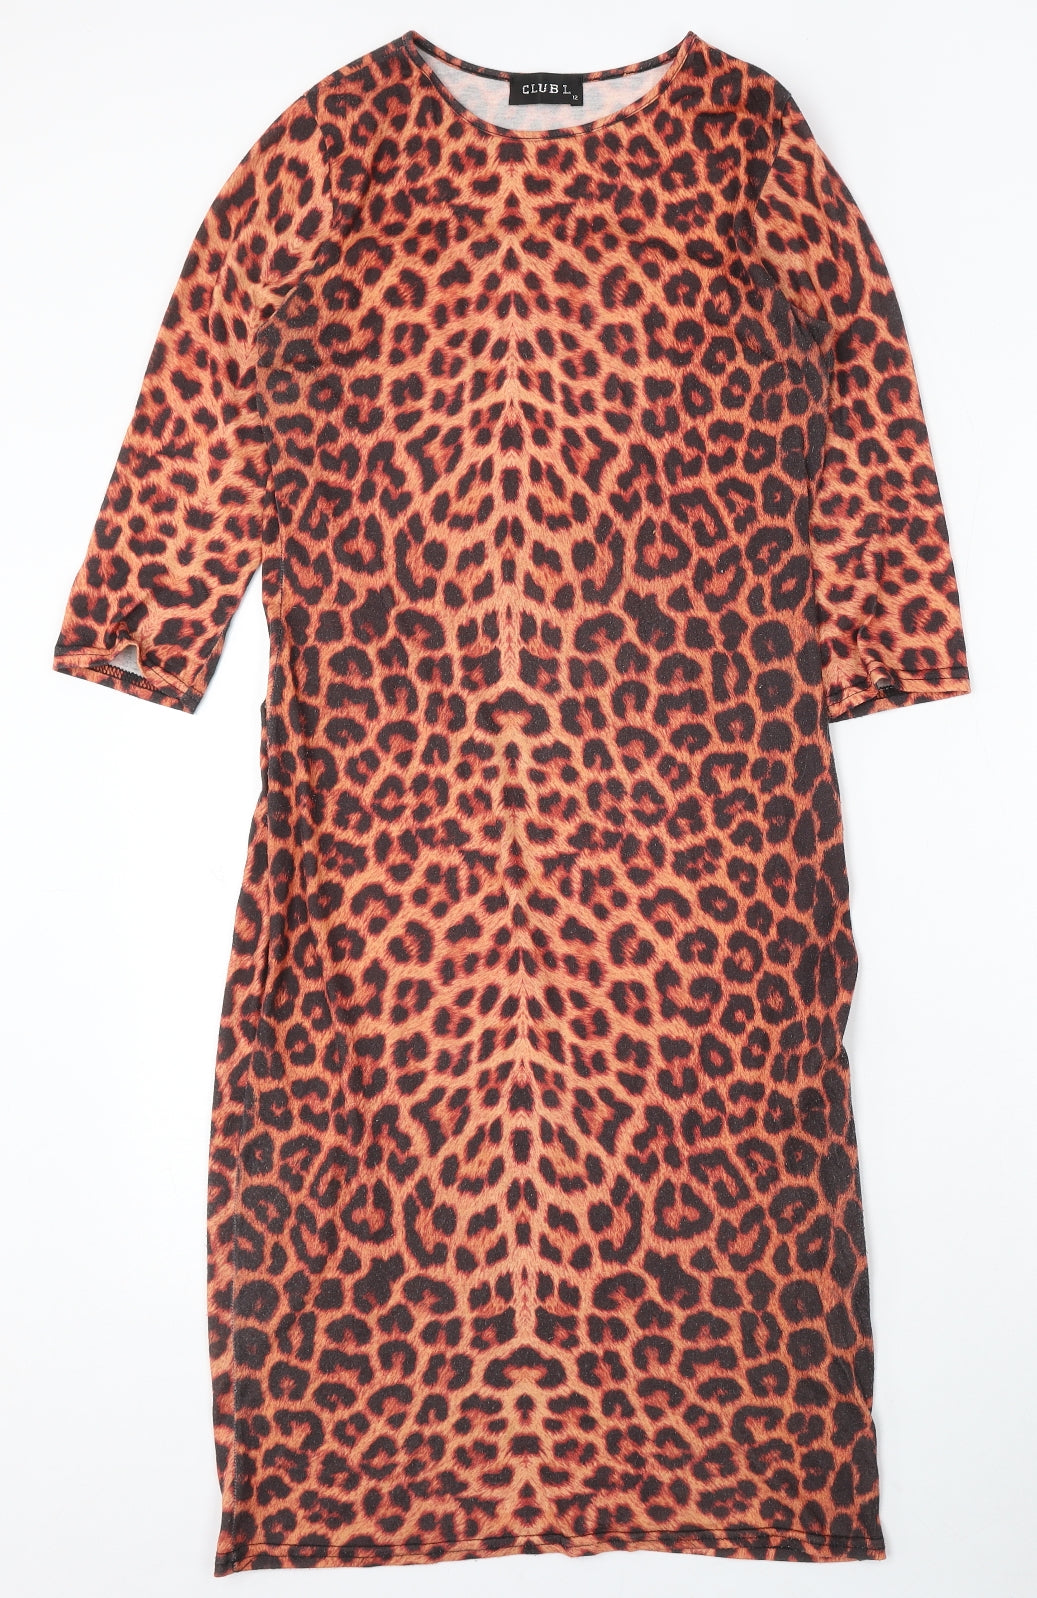 Club L Womens Brown Animal Print Polyester Sheath Size 12 Round Neck - Leopard Print